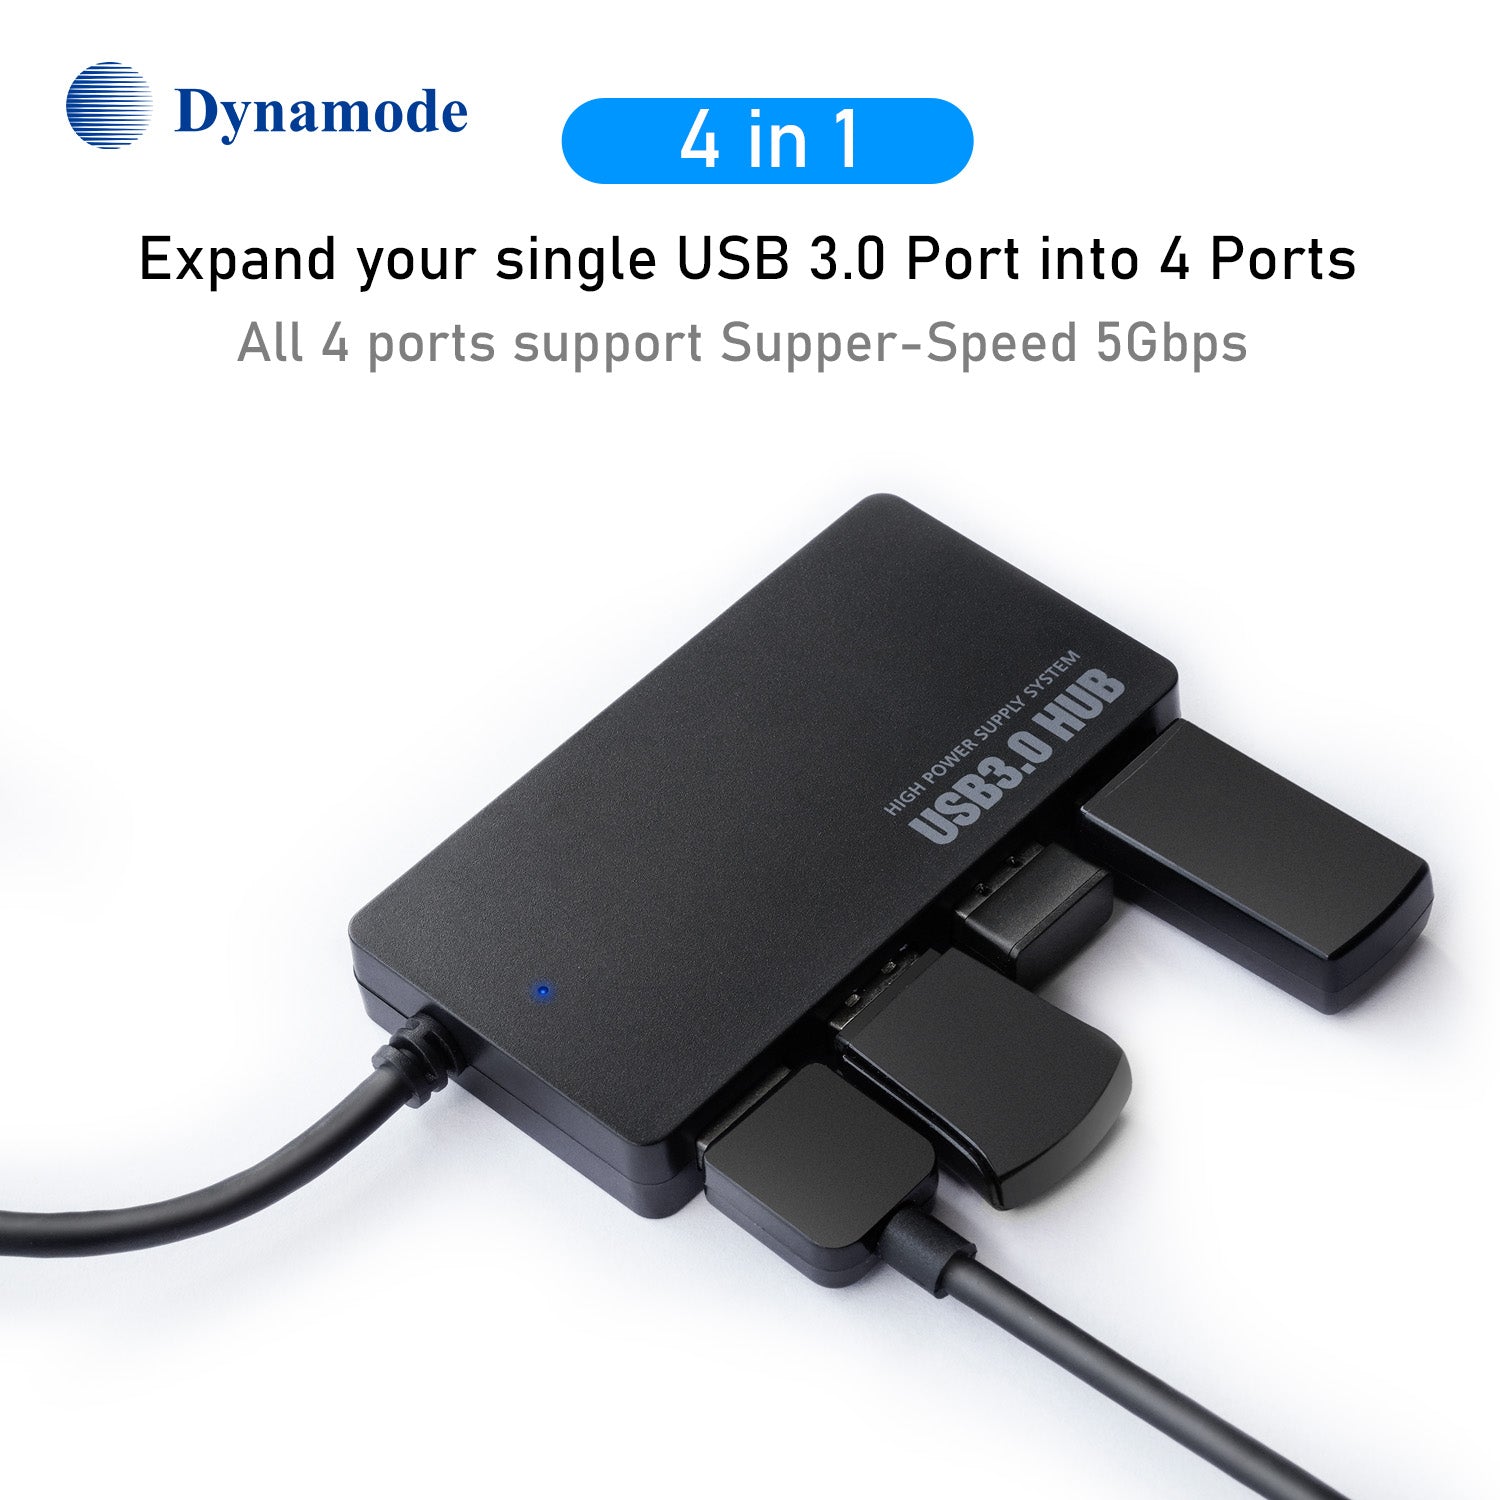 USB 3.0 connectivity